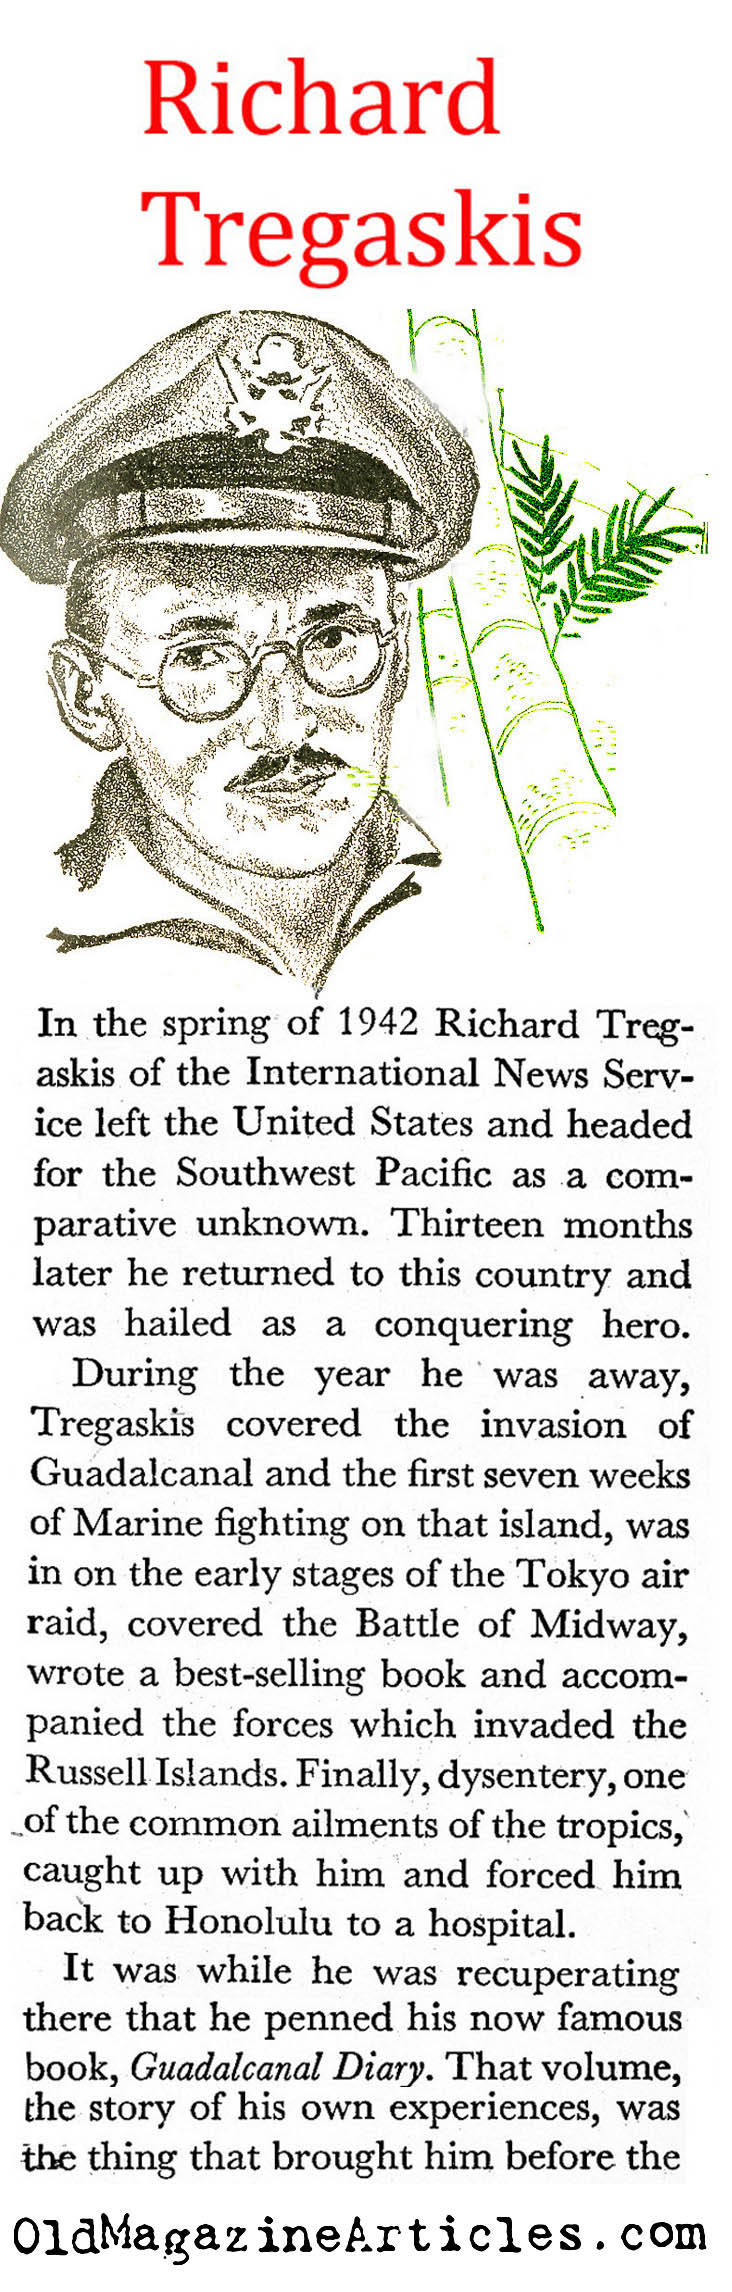 Richard Tregaskis of the International News Service (Coronet, 1944)